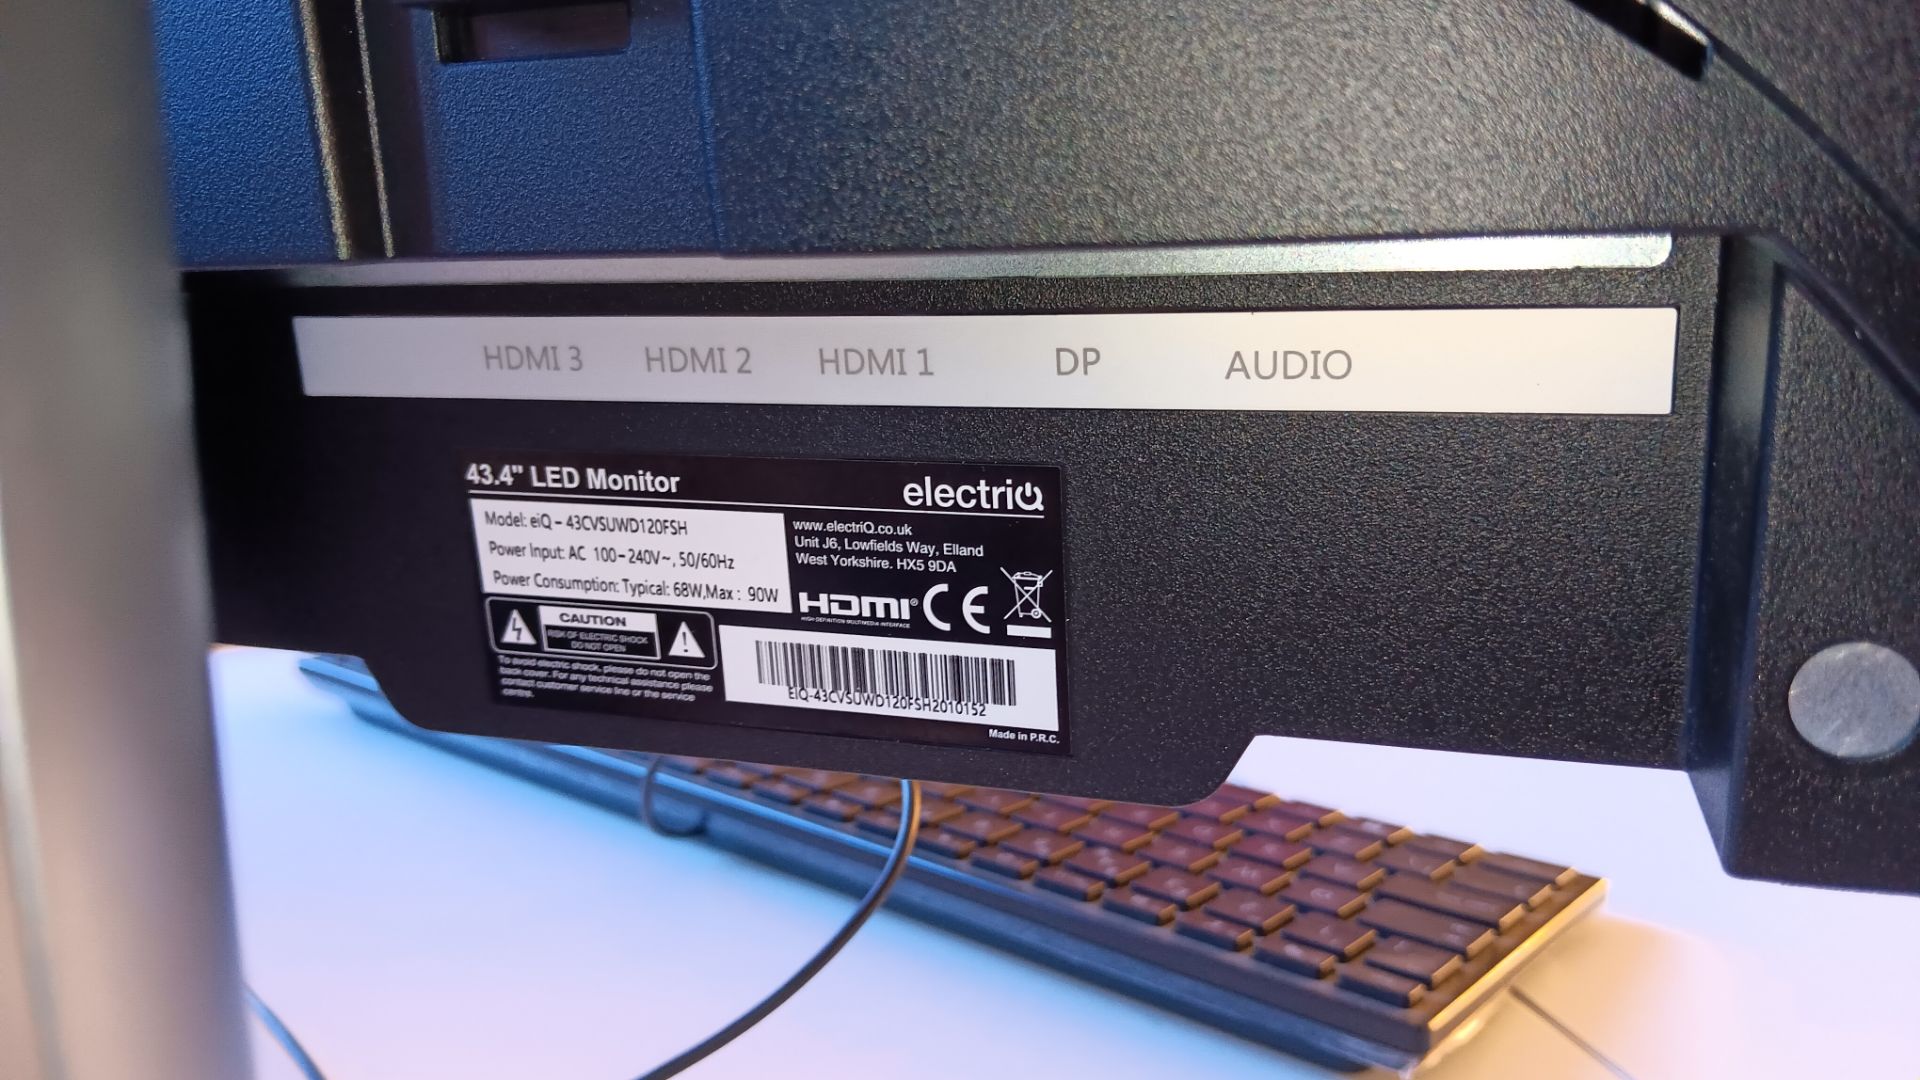 ElectriQ eiQ-43CVSUWD120FSH ultrawide 43.4in curved LED monitor – Located Twyford, OX17 - Image 2 of 3